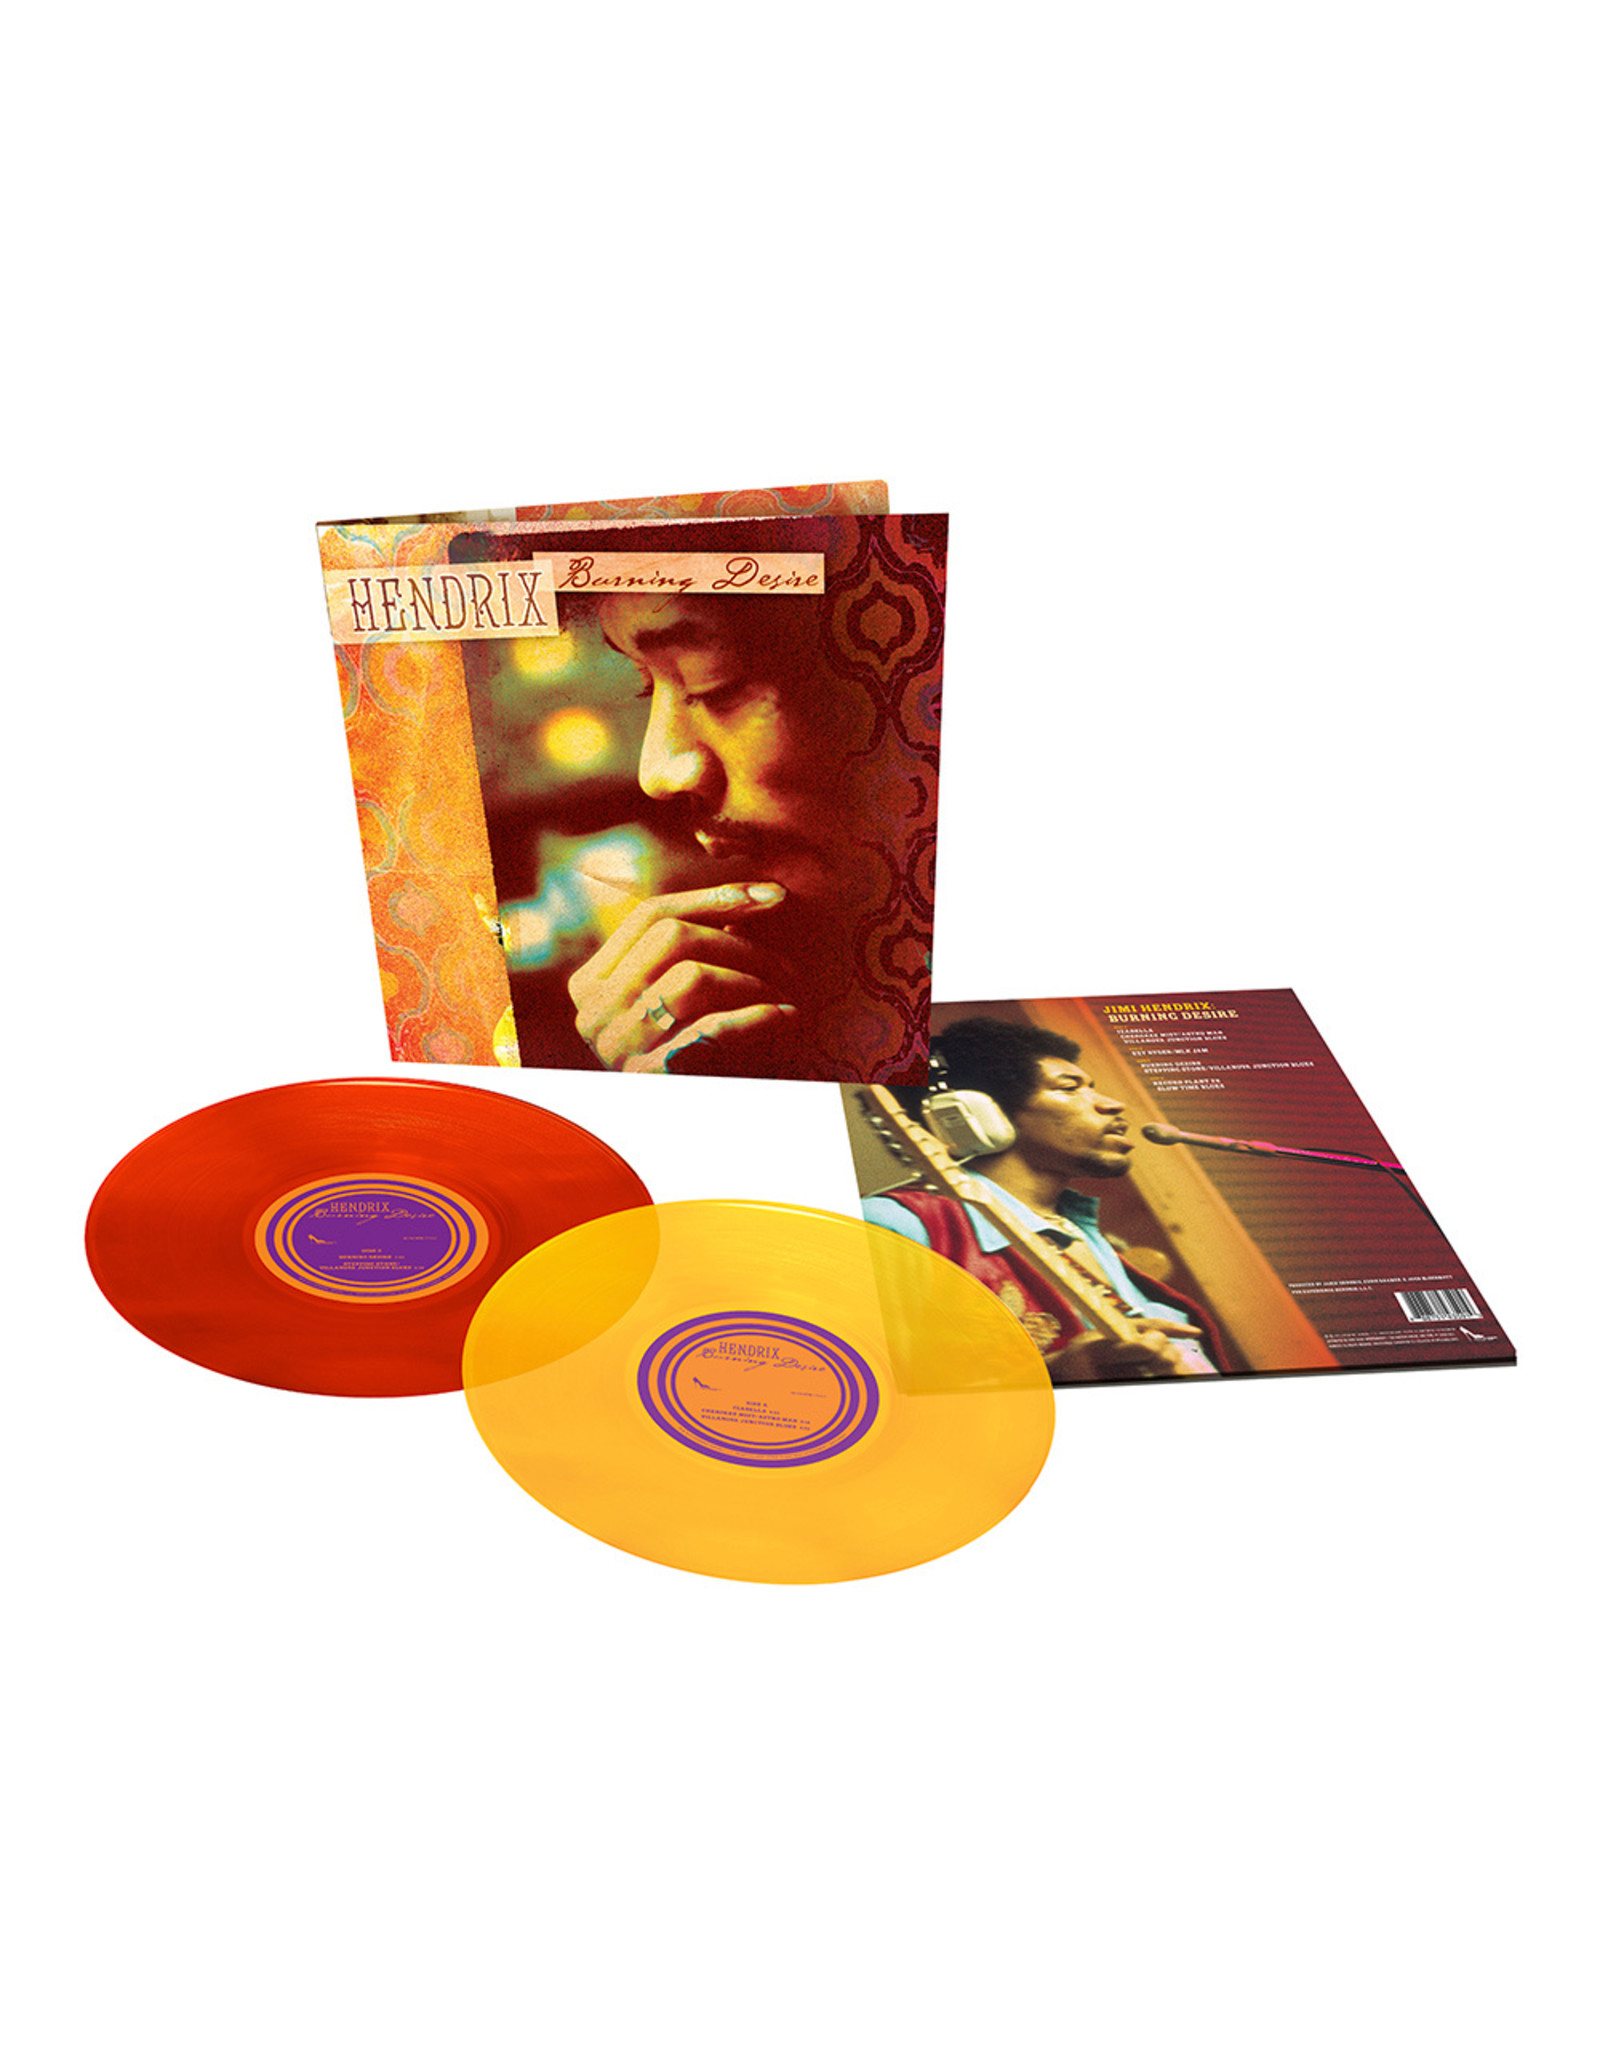 Jimi Hendrix - Burning Desire (Exclusive Red / Orange Vinyl)